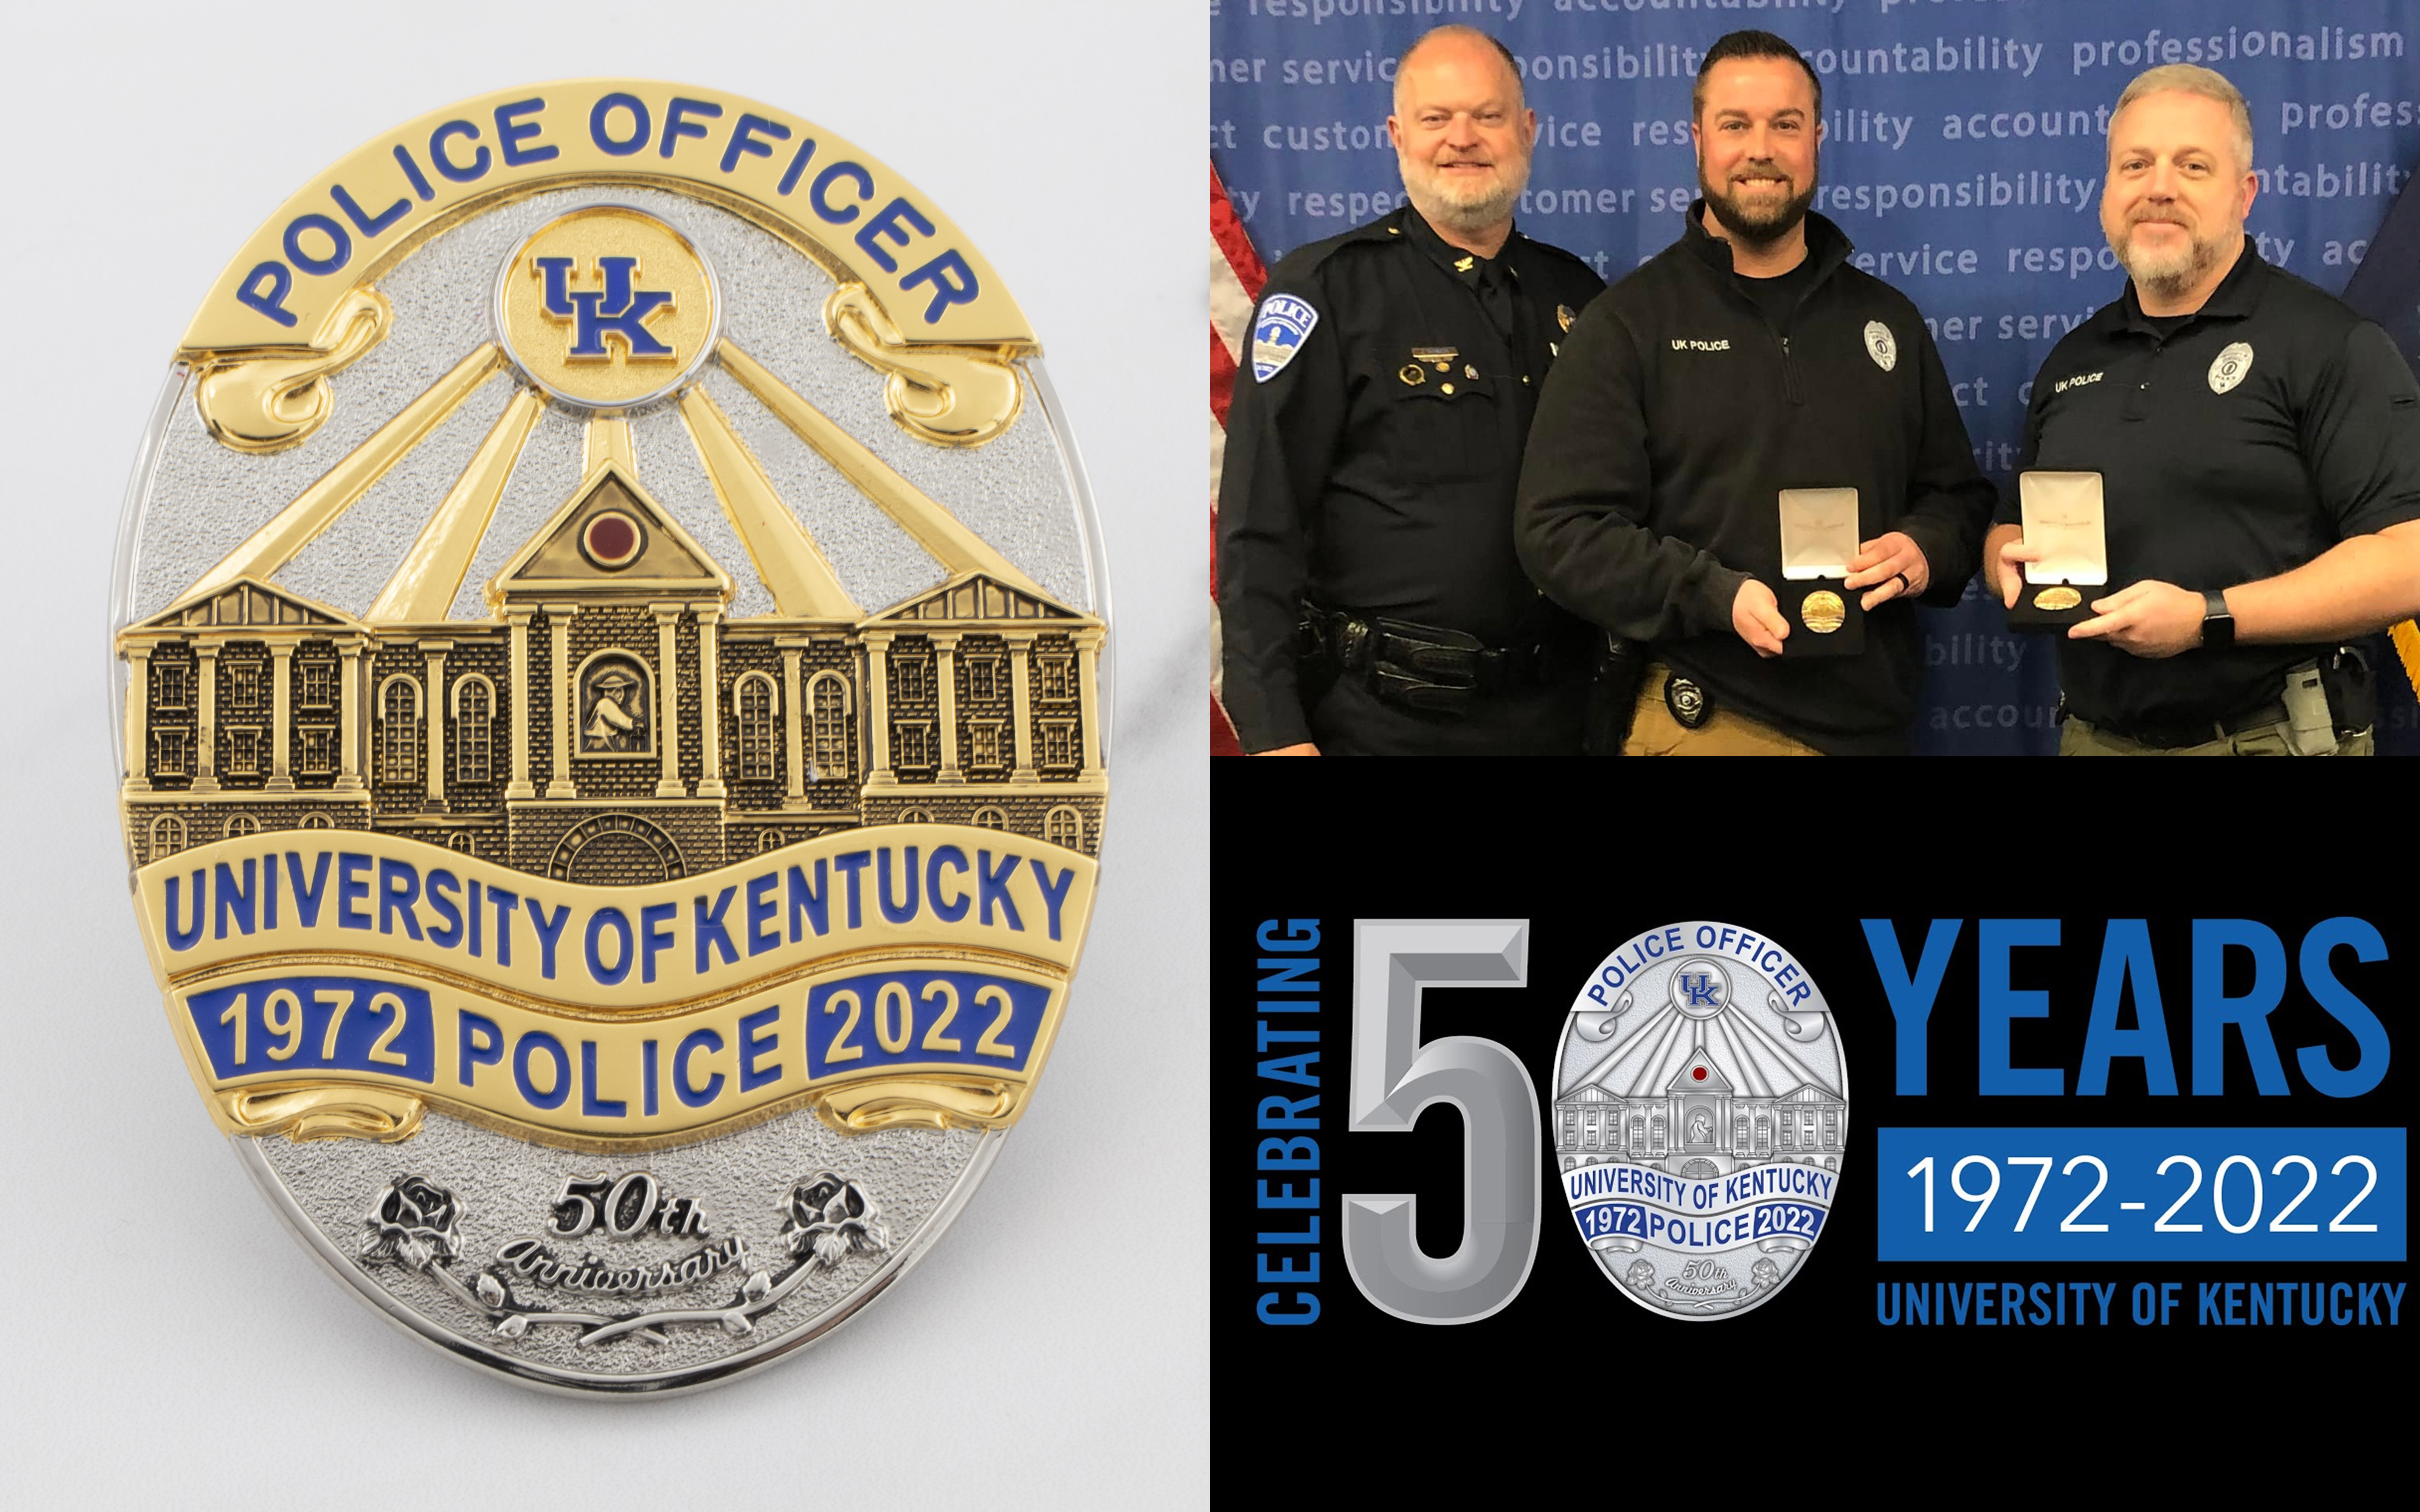 university of Kentucky police anniversary